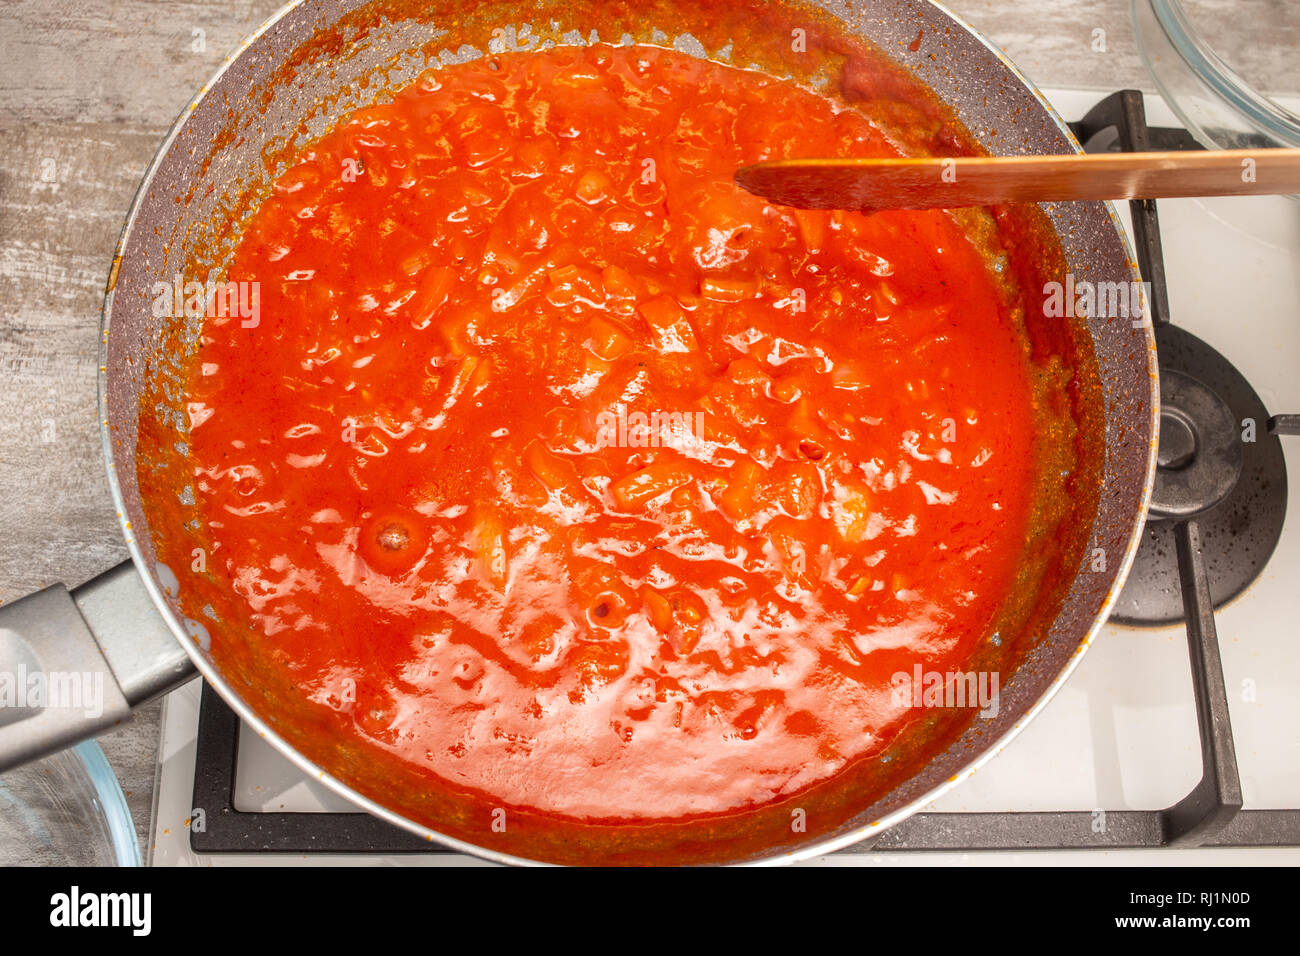 preparation homemade hot tomato sauce on home kitchen Stock Photo